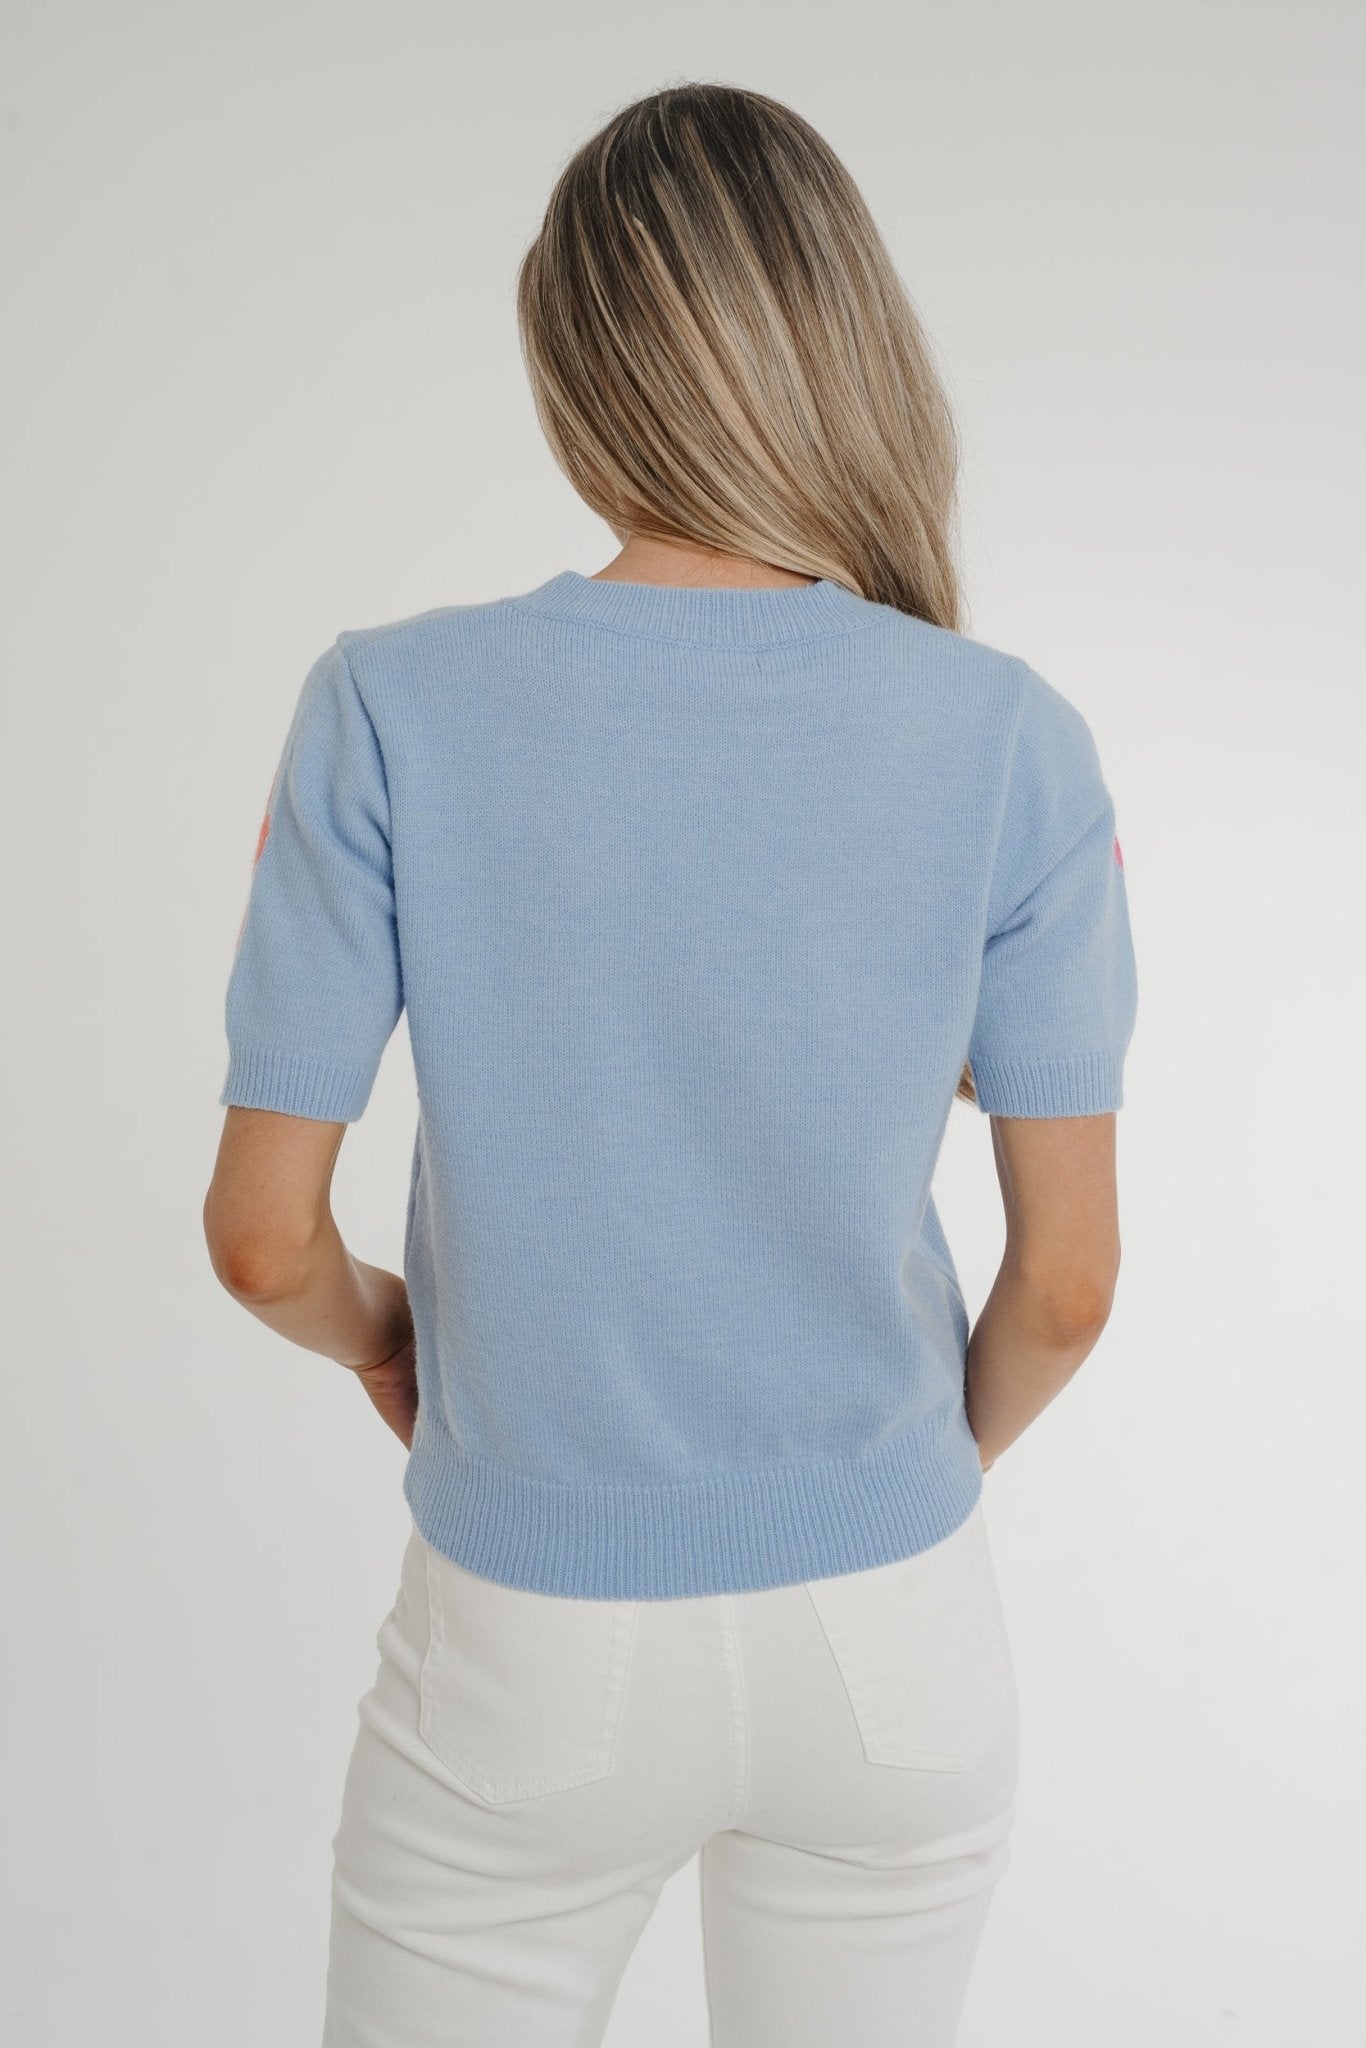 Melanie Floral Short Sleeve Jumper In Blue - The Walk in Wardrobe